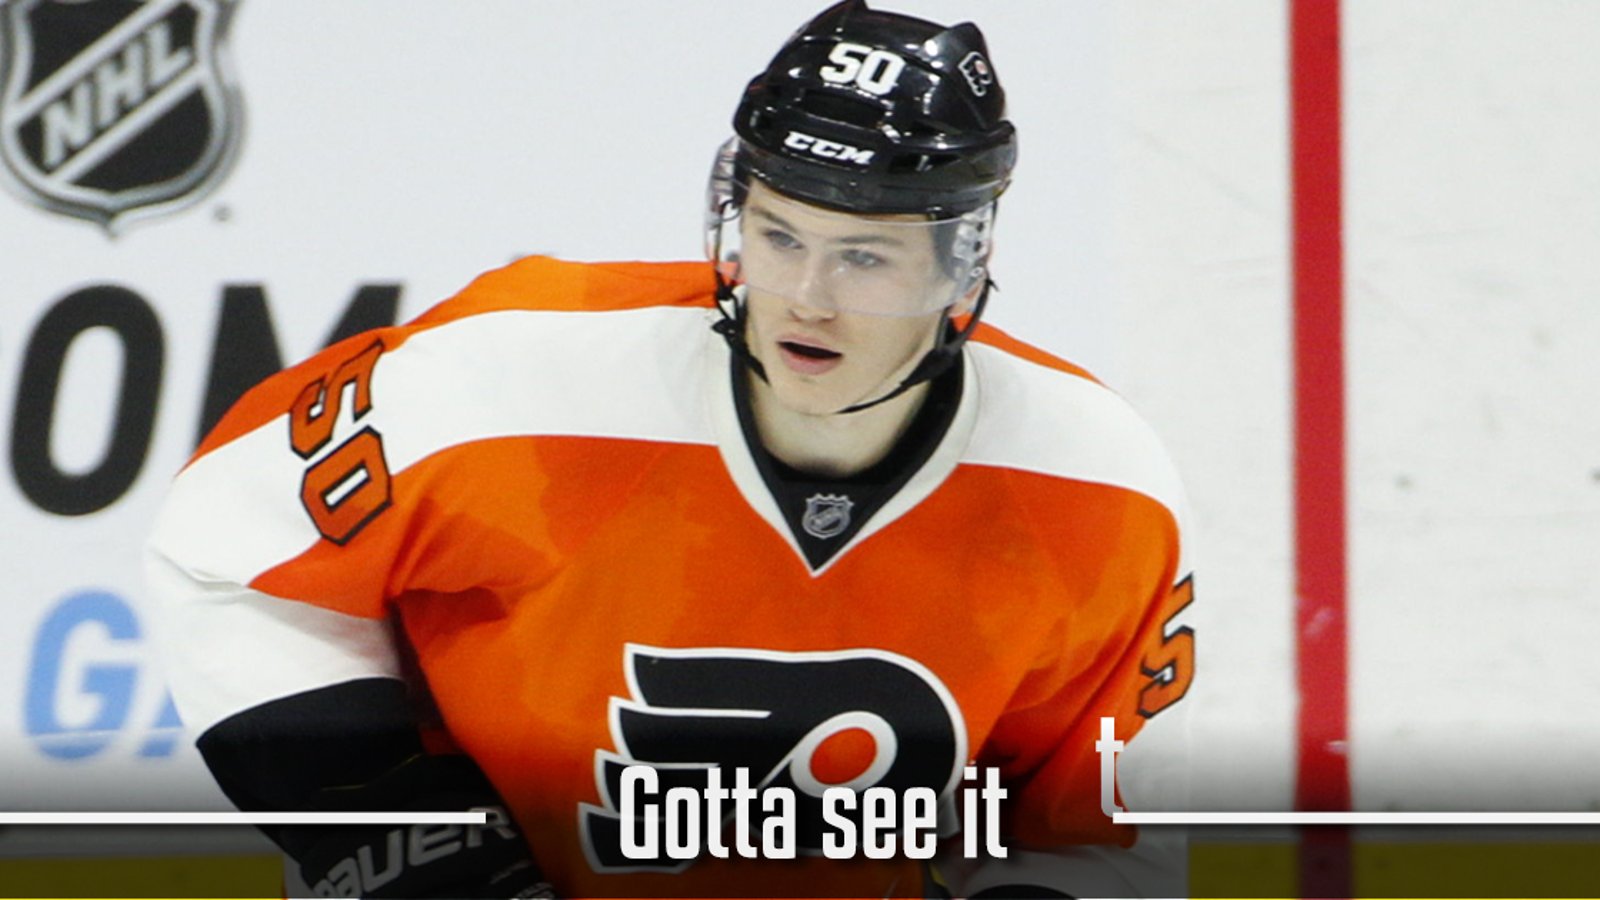 Gotta see it: The Philadelphia Flyers pranked both new comers last night! 